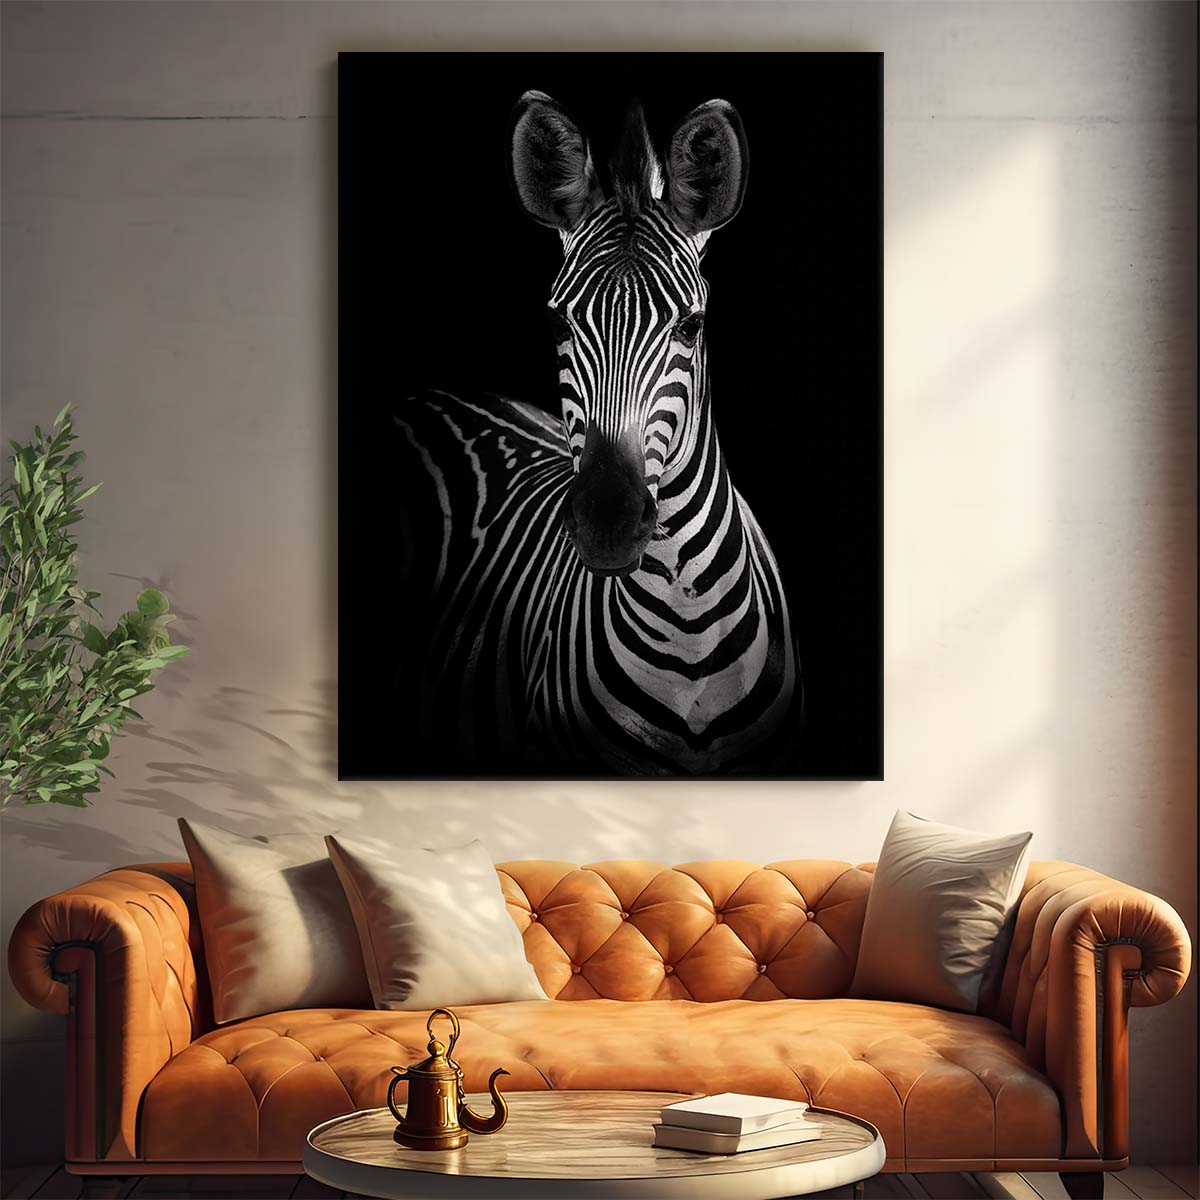 Monochrome Zebra Portrait - African Wildlife Photography Artwork by Luxuriance Designs, made in USA